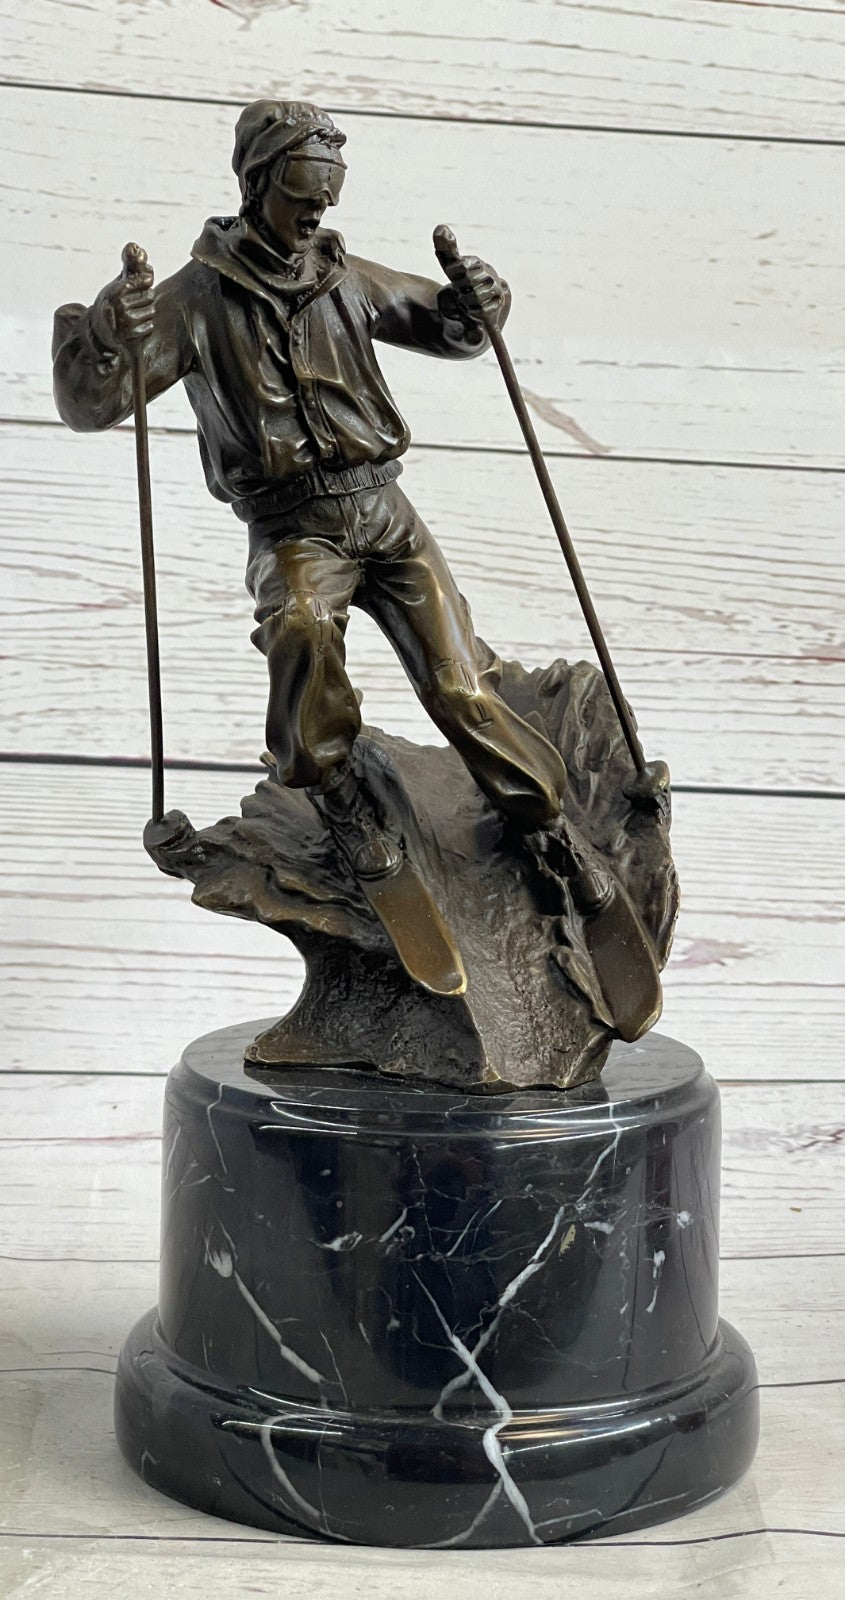 Signed: NICK Bronze Sculpture skier men skiiing snow ski sports Statue Figurine